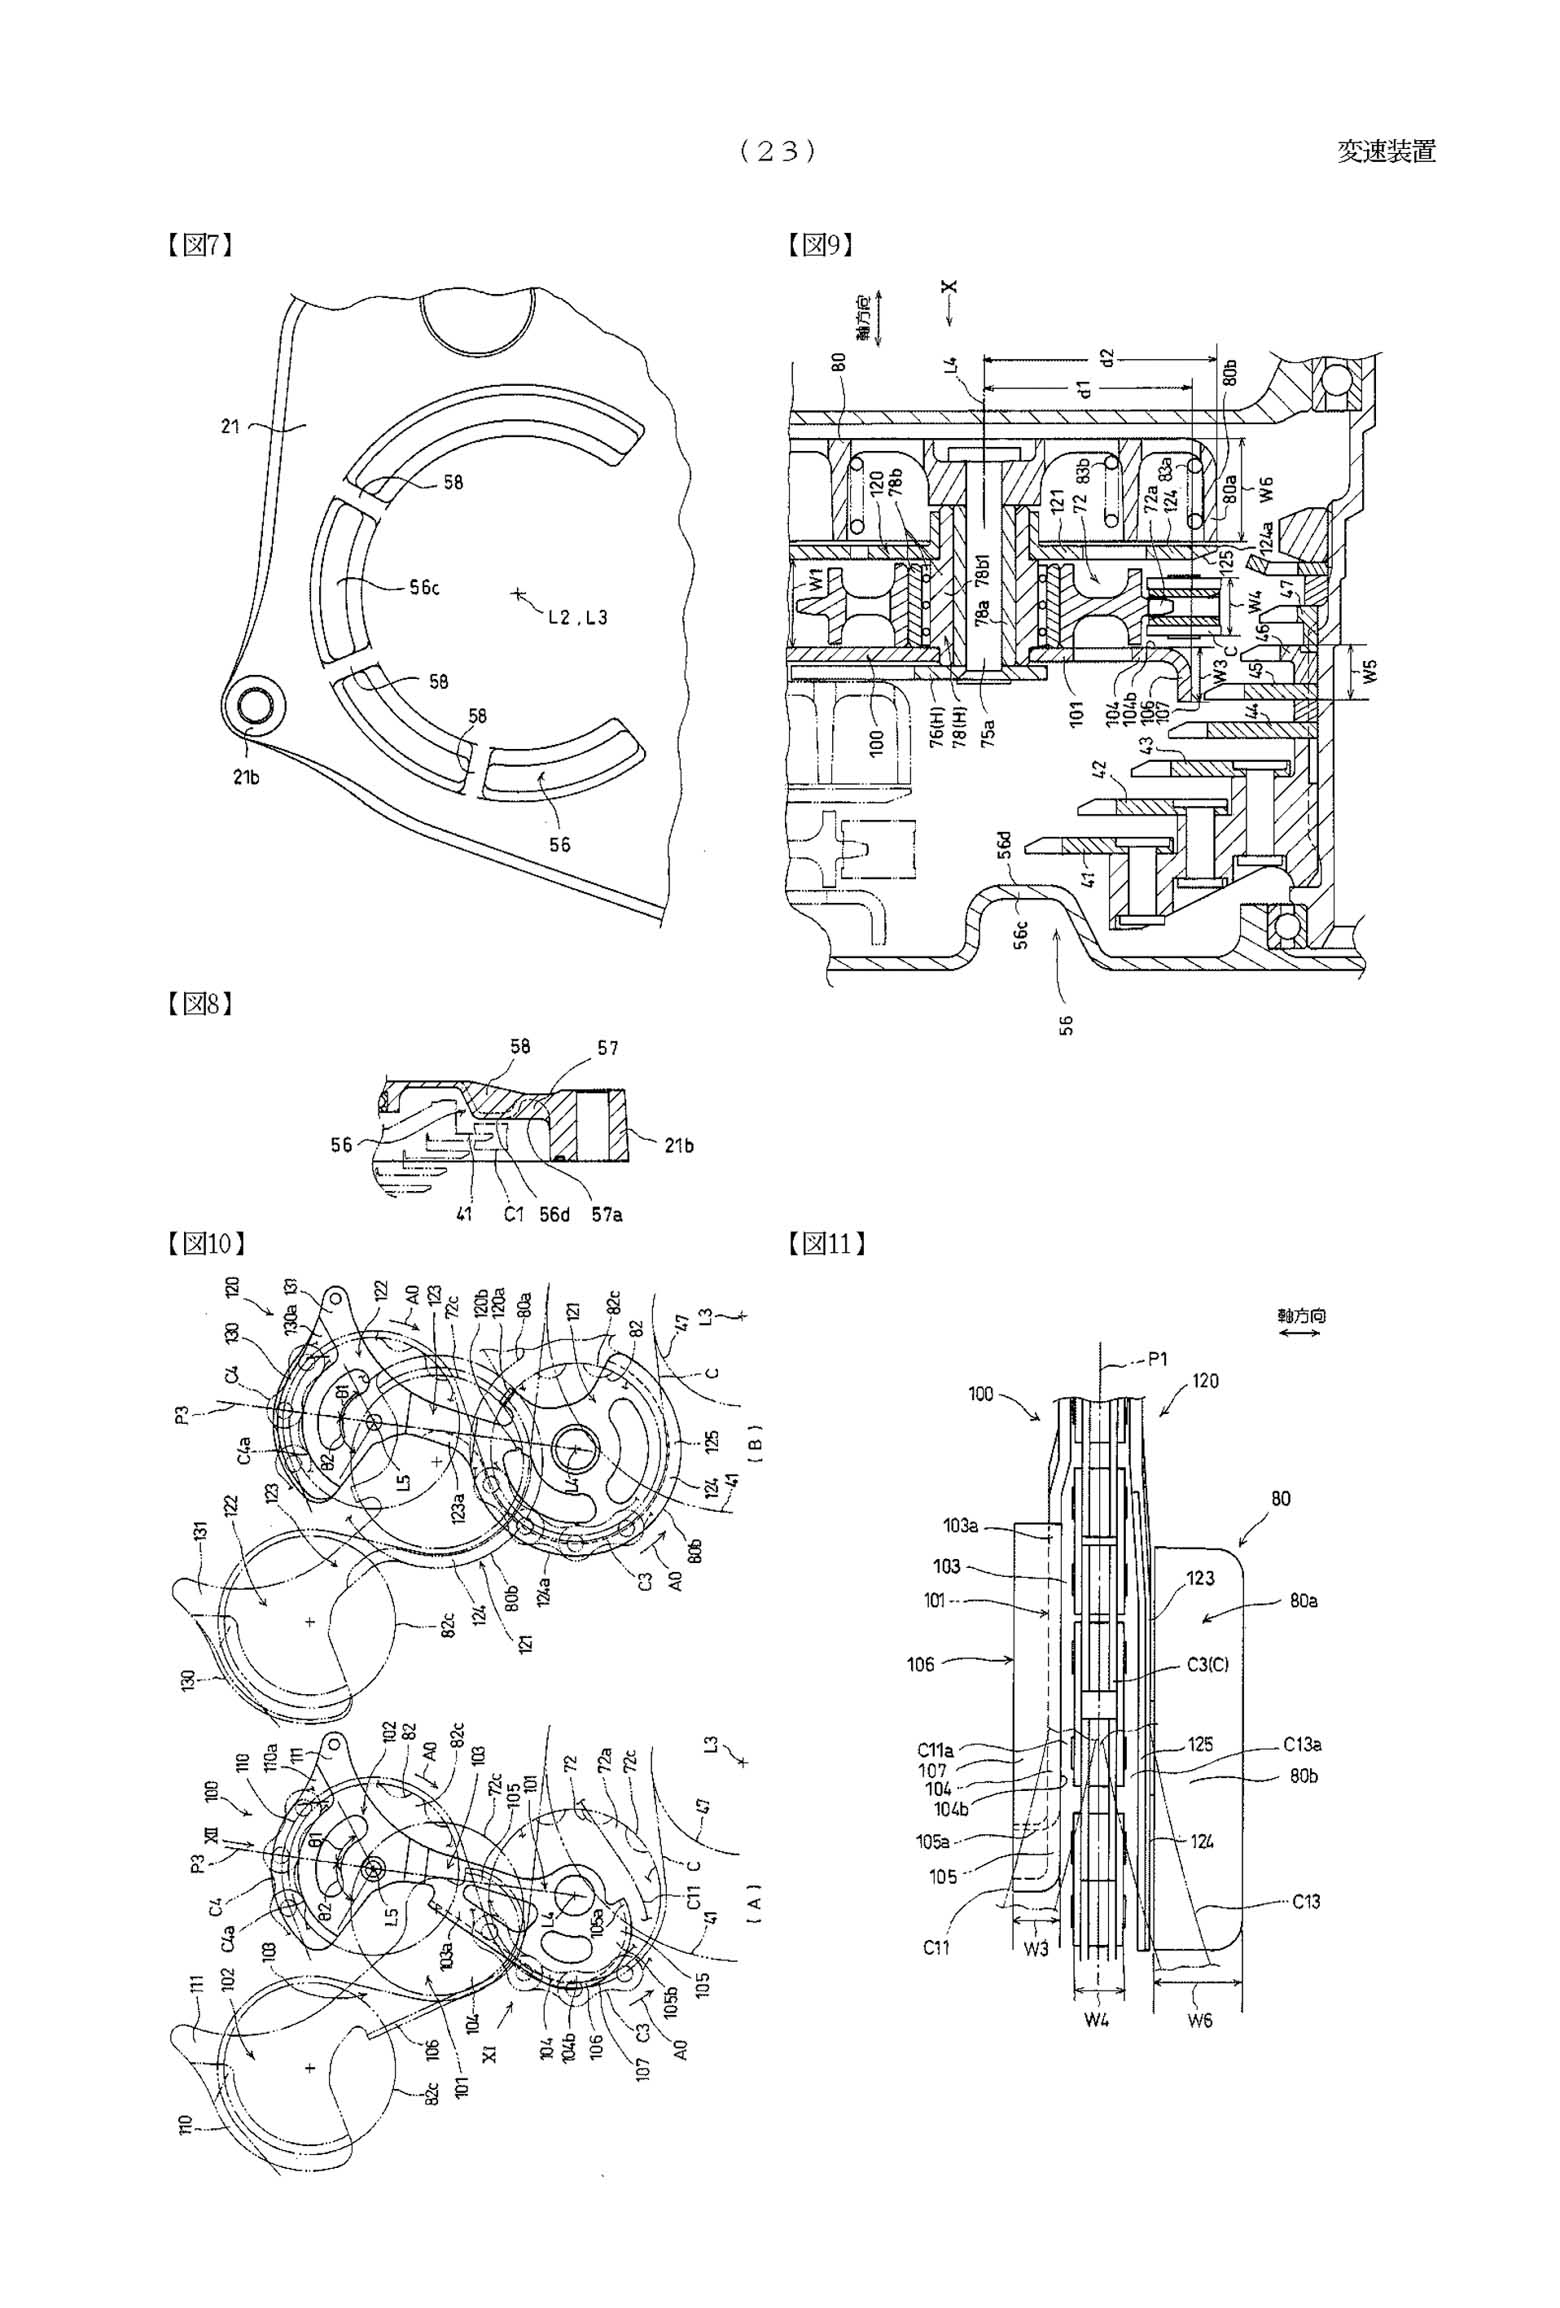 Japanese Patent 4416604 - Honda page 23 main image